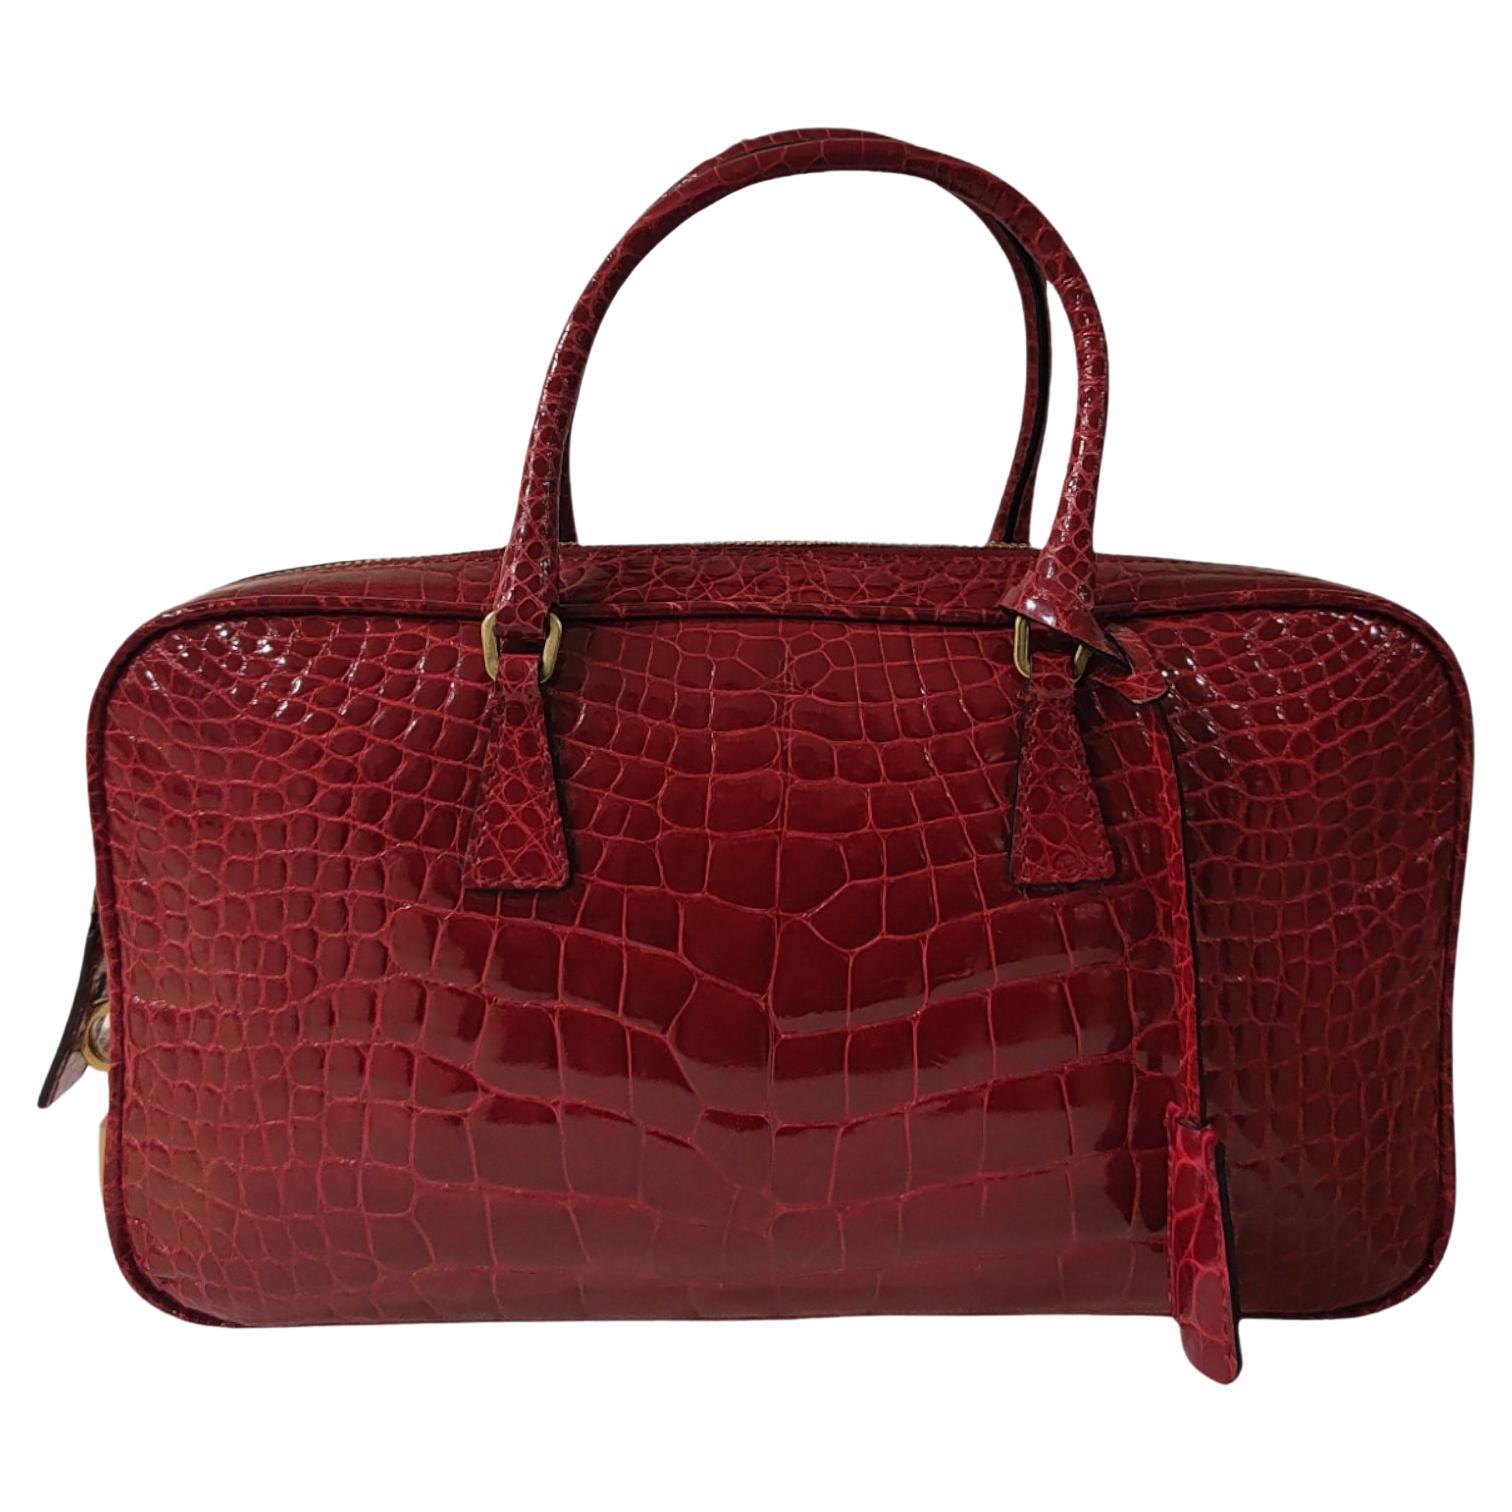 Prada red crocodile handbag